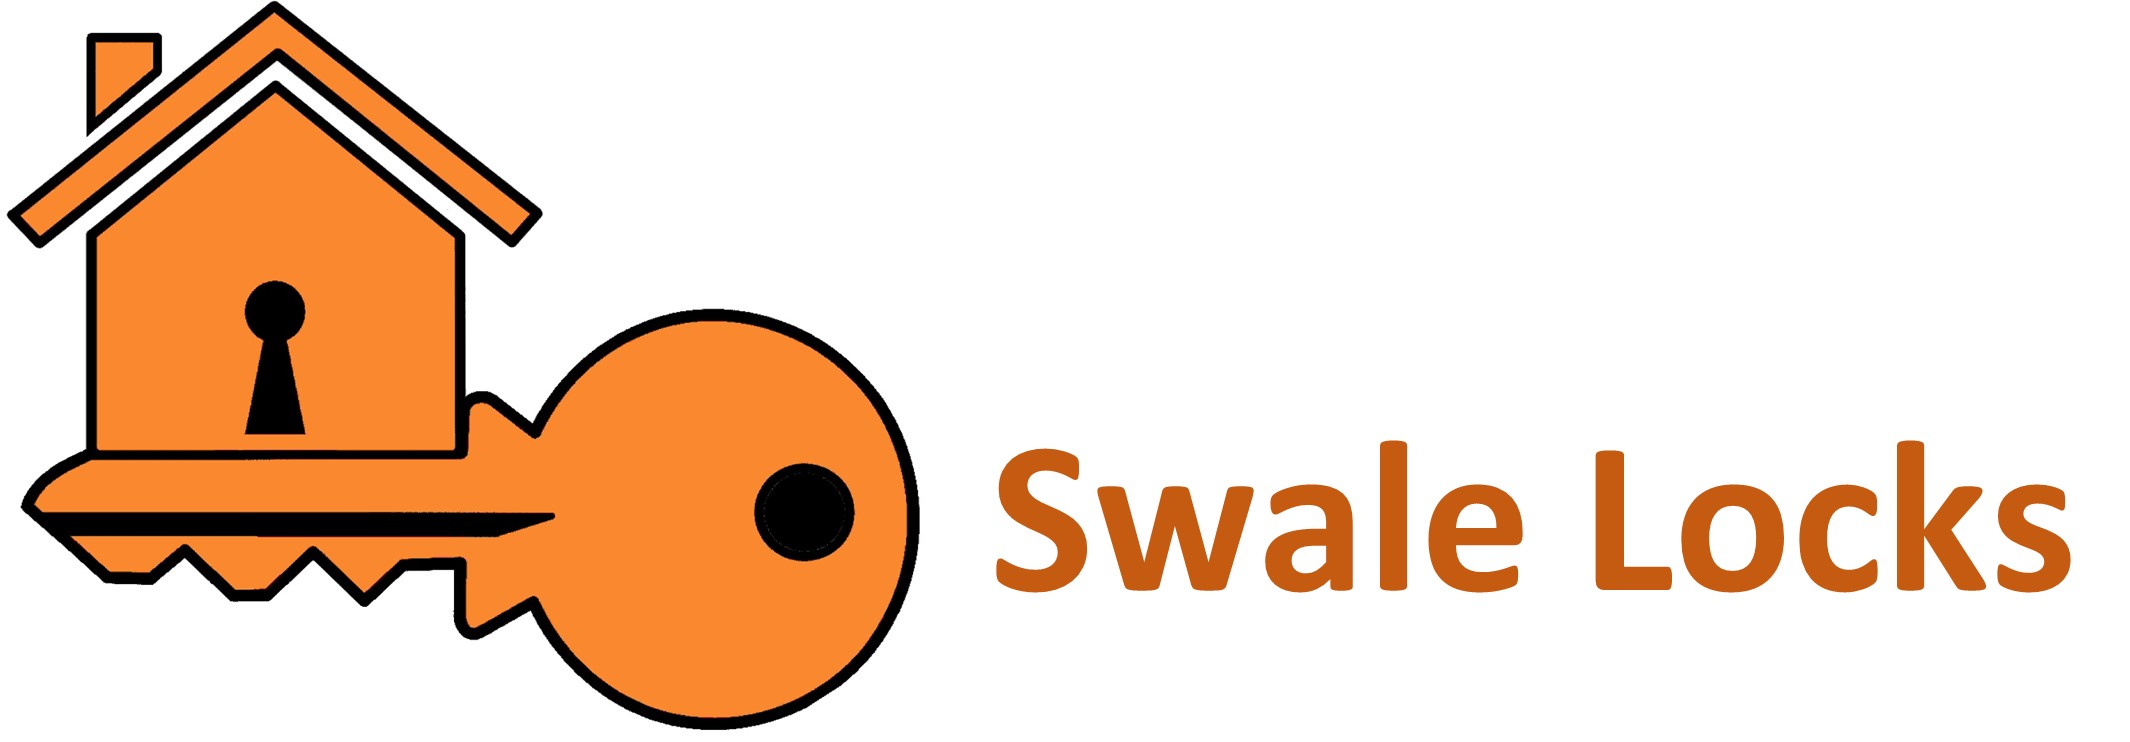 Swale Locks